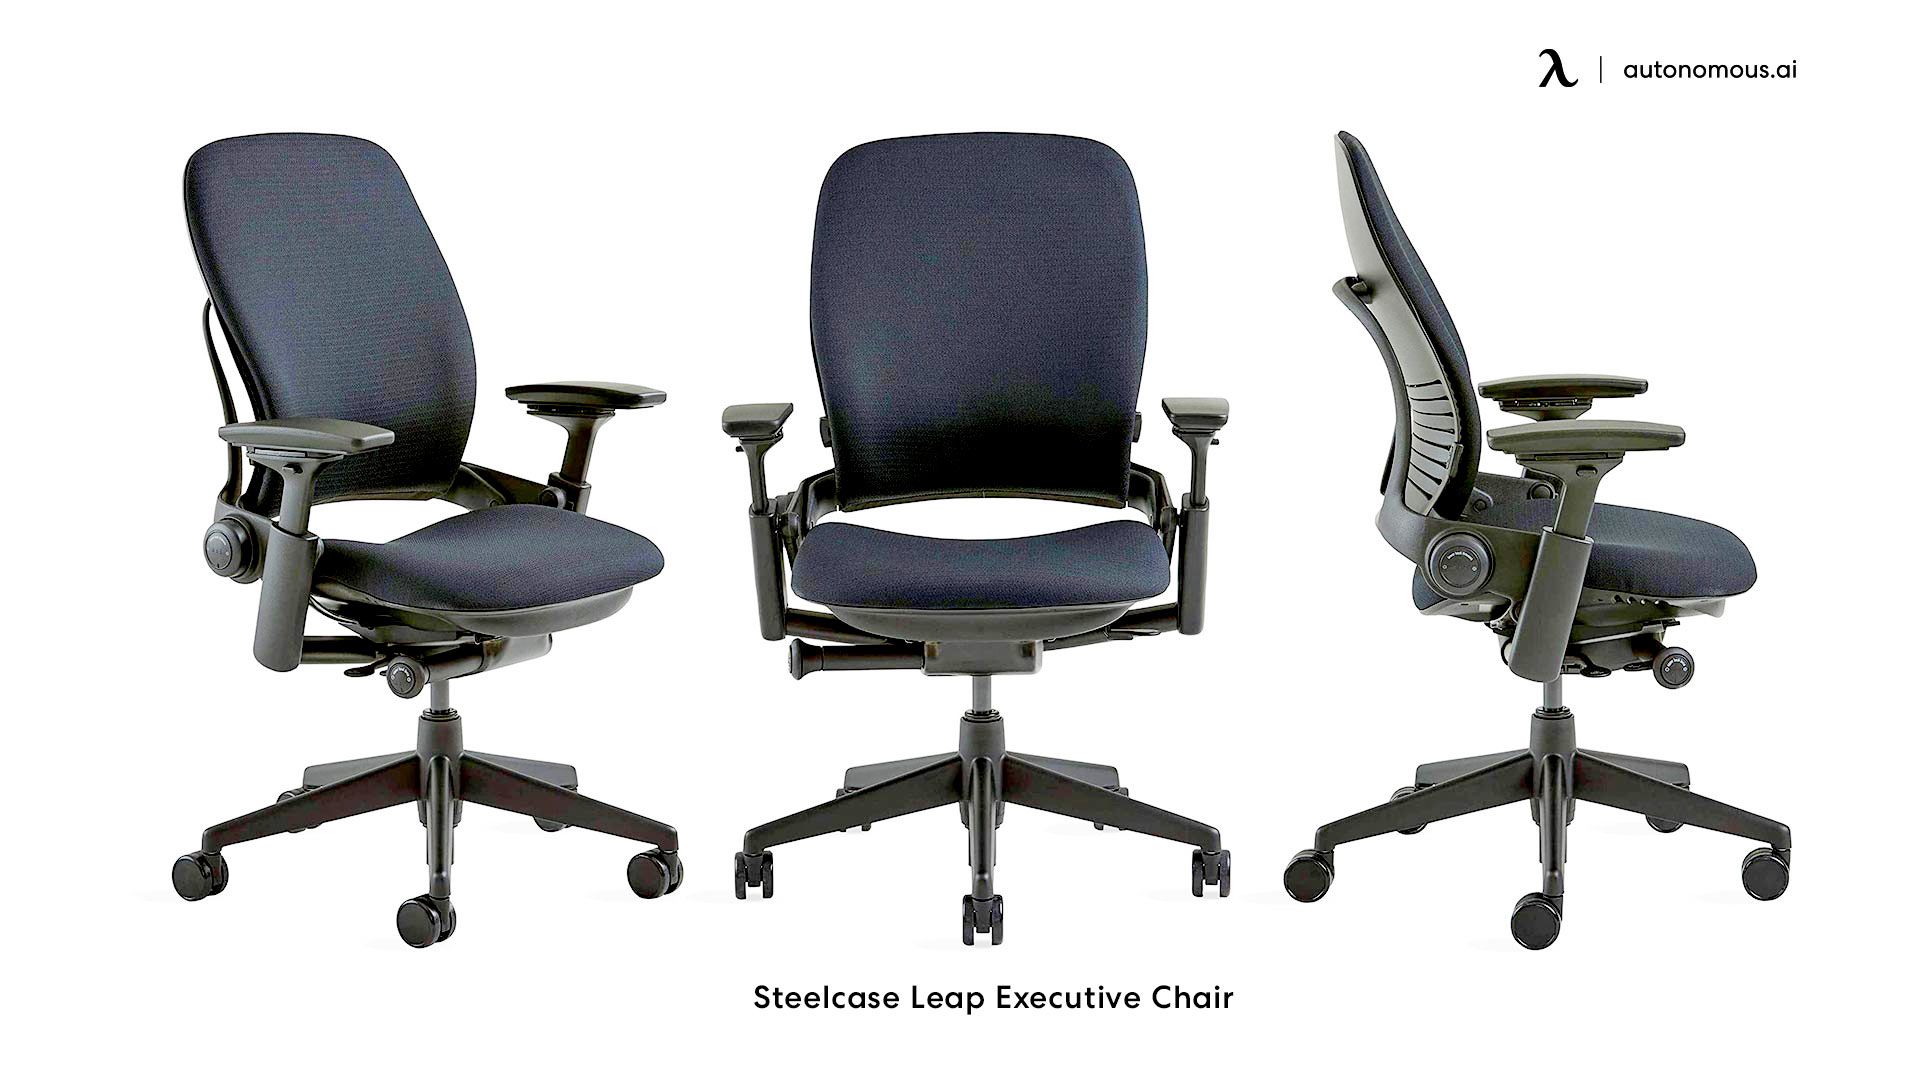 Leap office chair deals